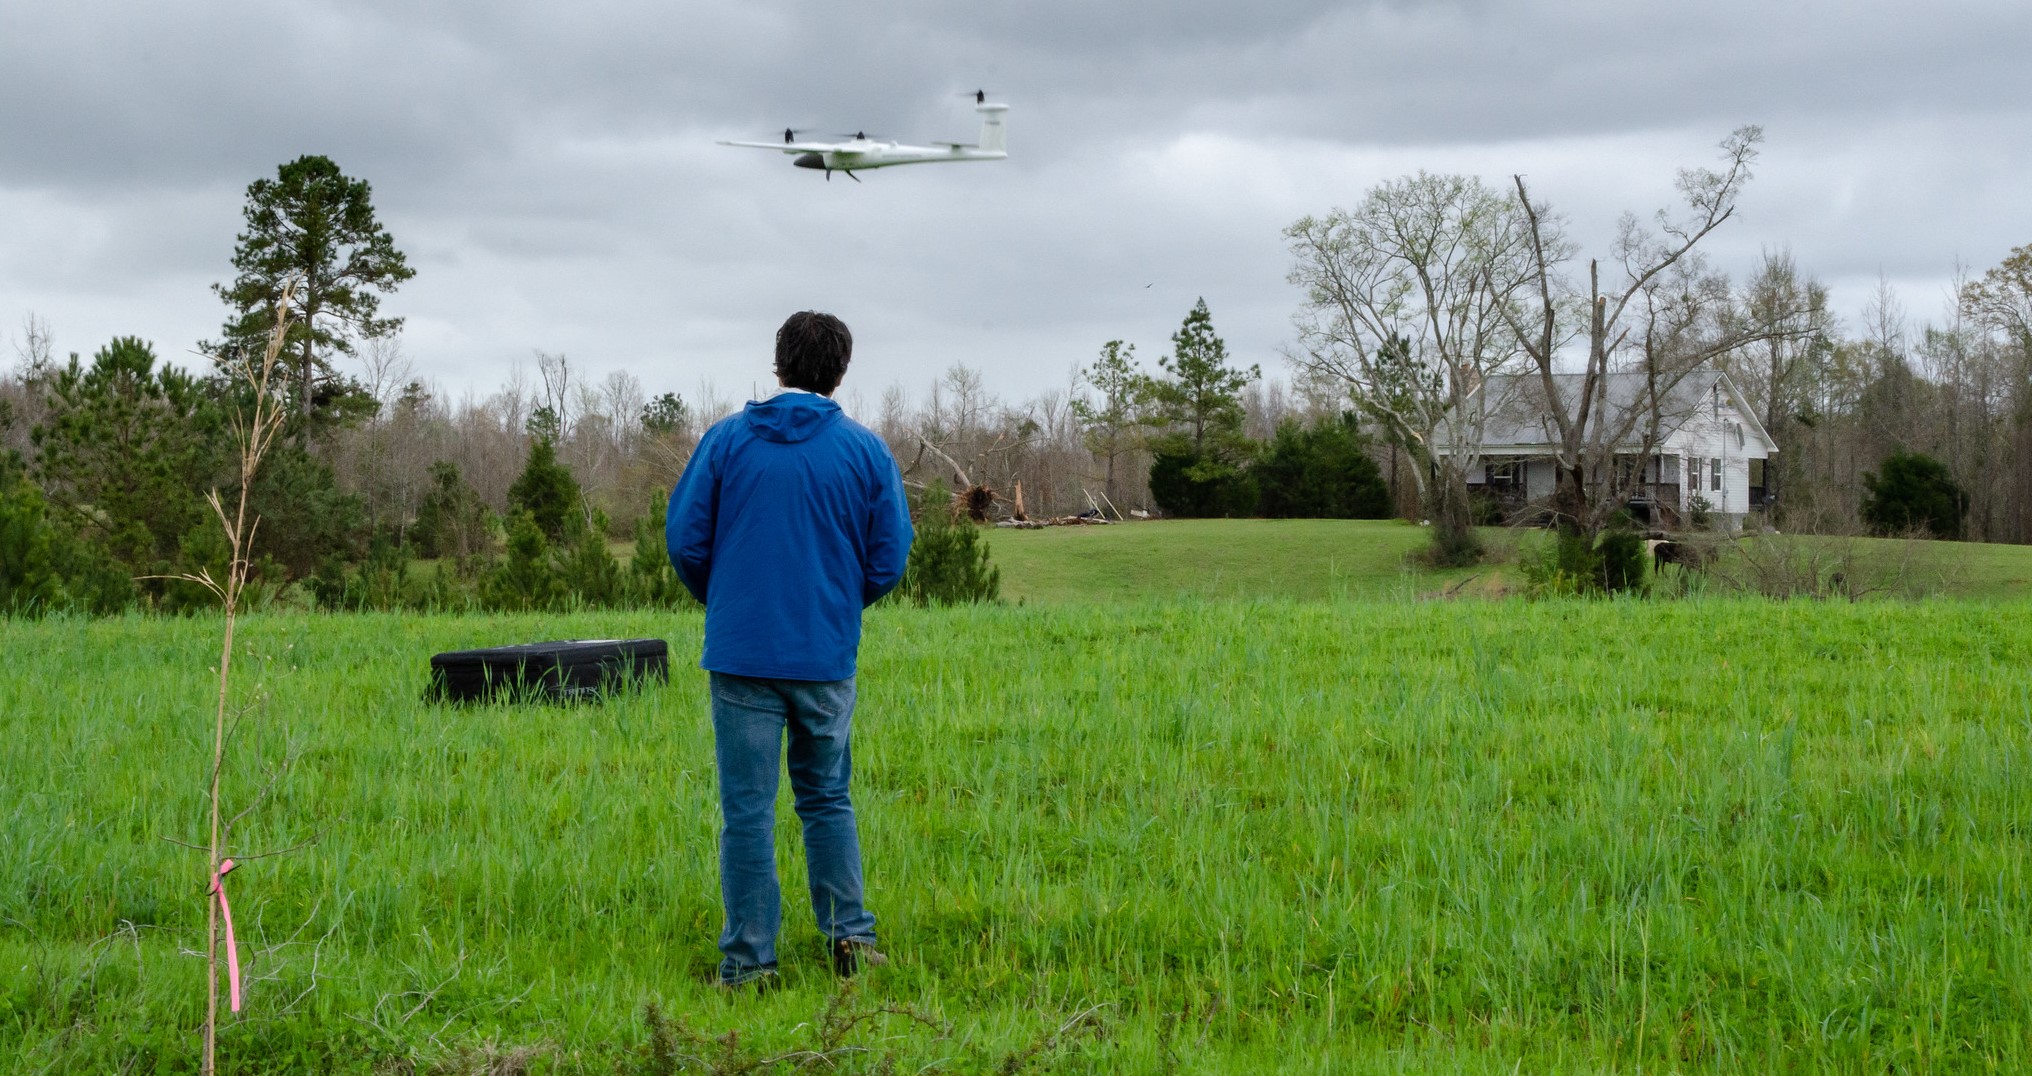 NOAA scientists use drones to see tornado damage in remote areas